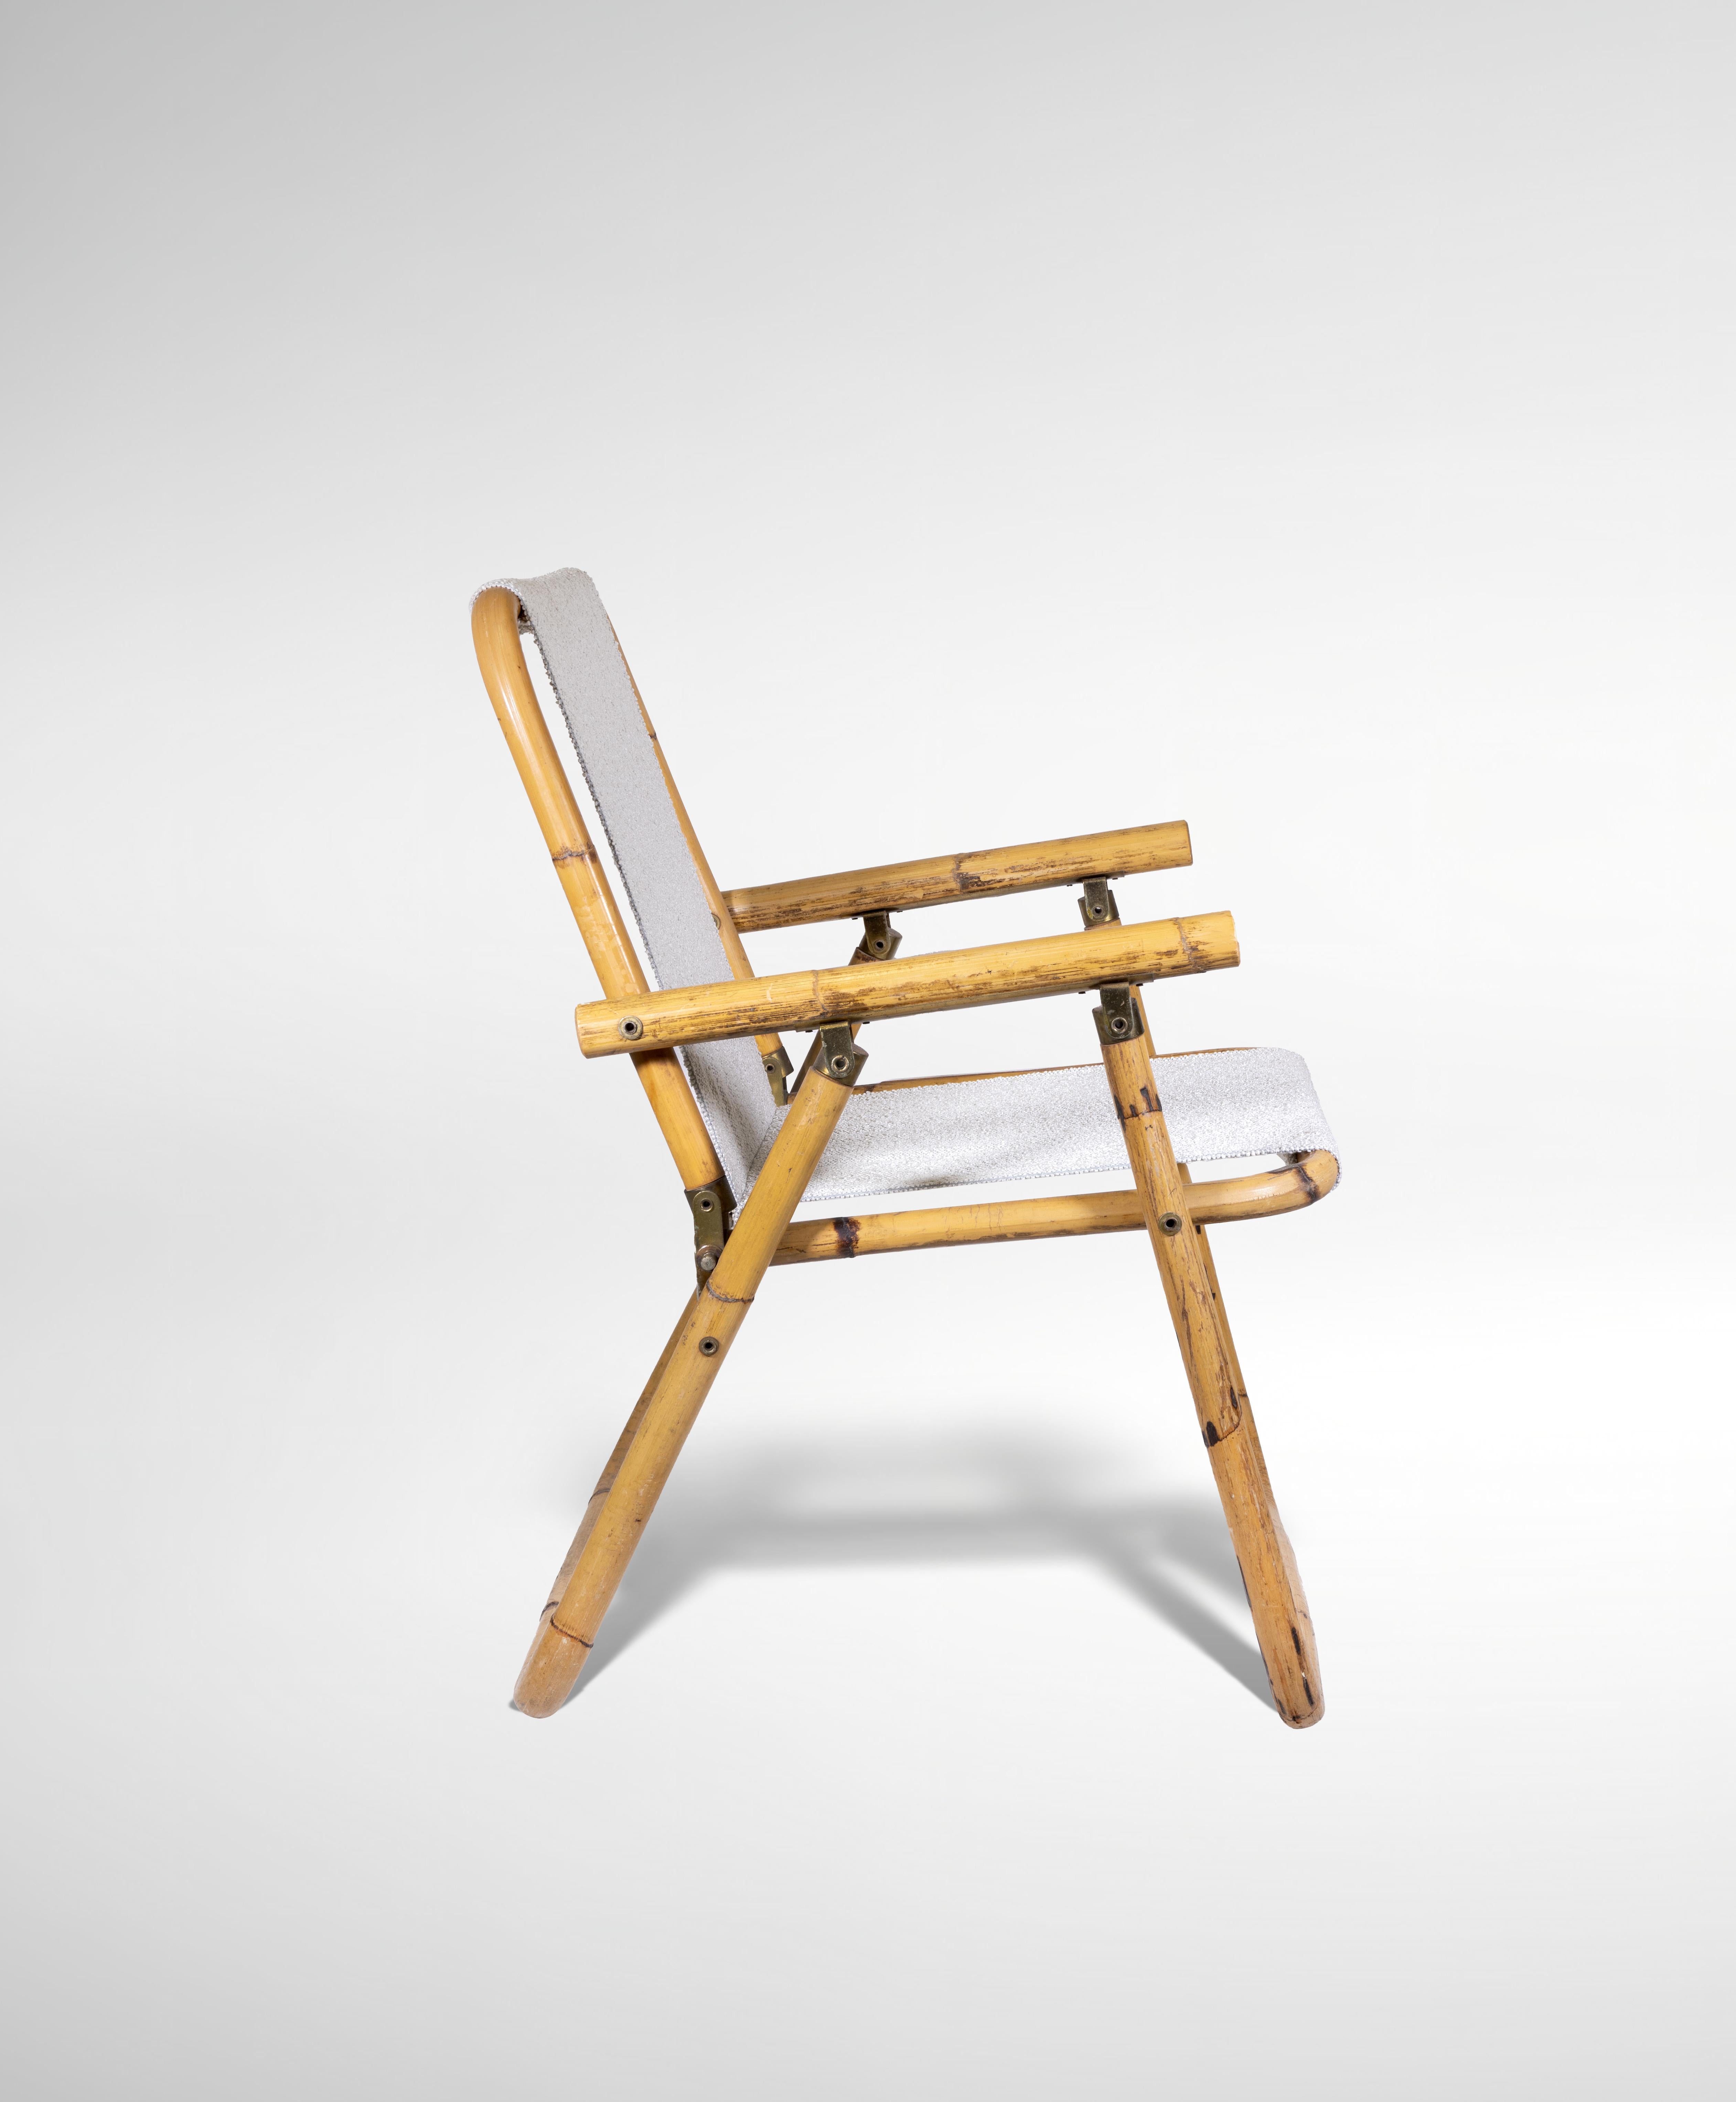 Faltbarer Stuhl Bambu, Italien 1960er Jahre.

83 x 63 x 63 cm.

Gute Bedingungen 